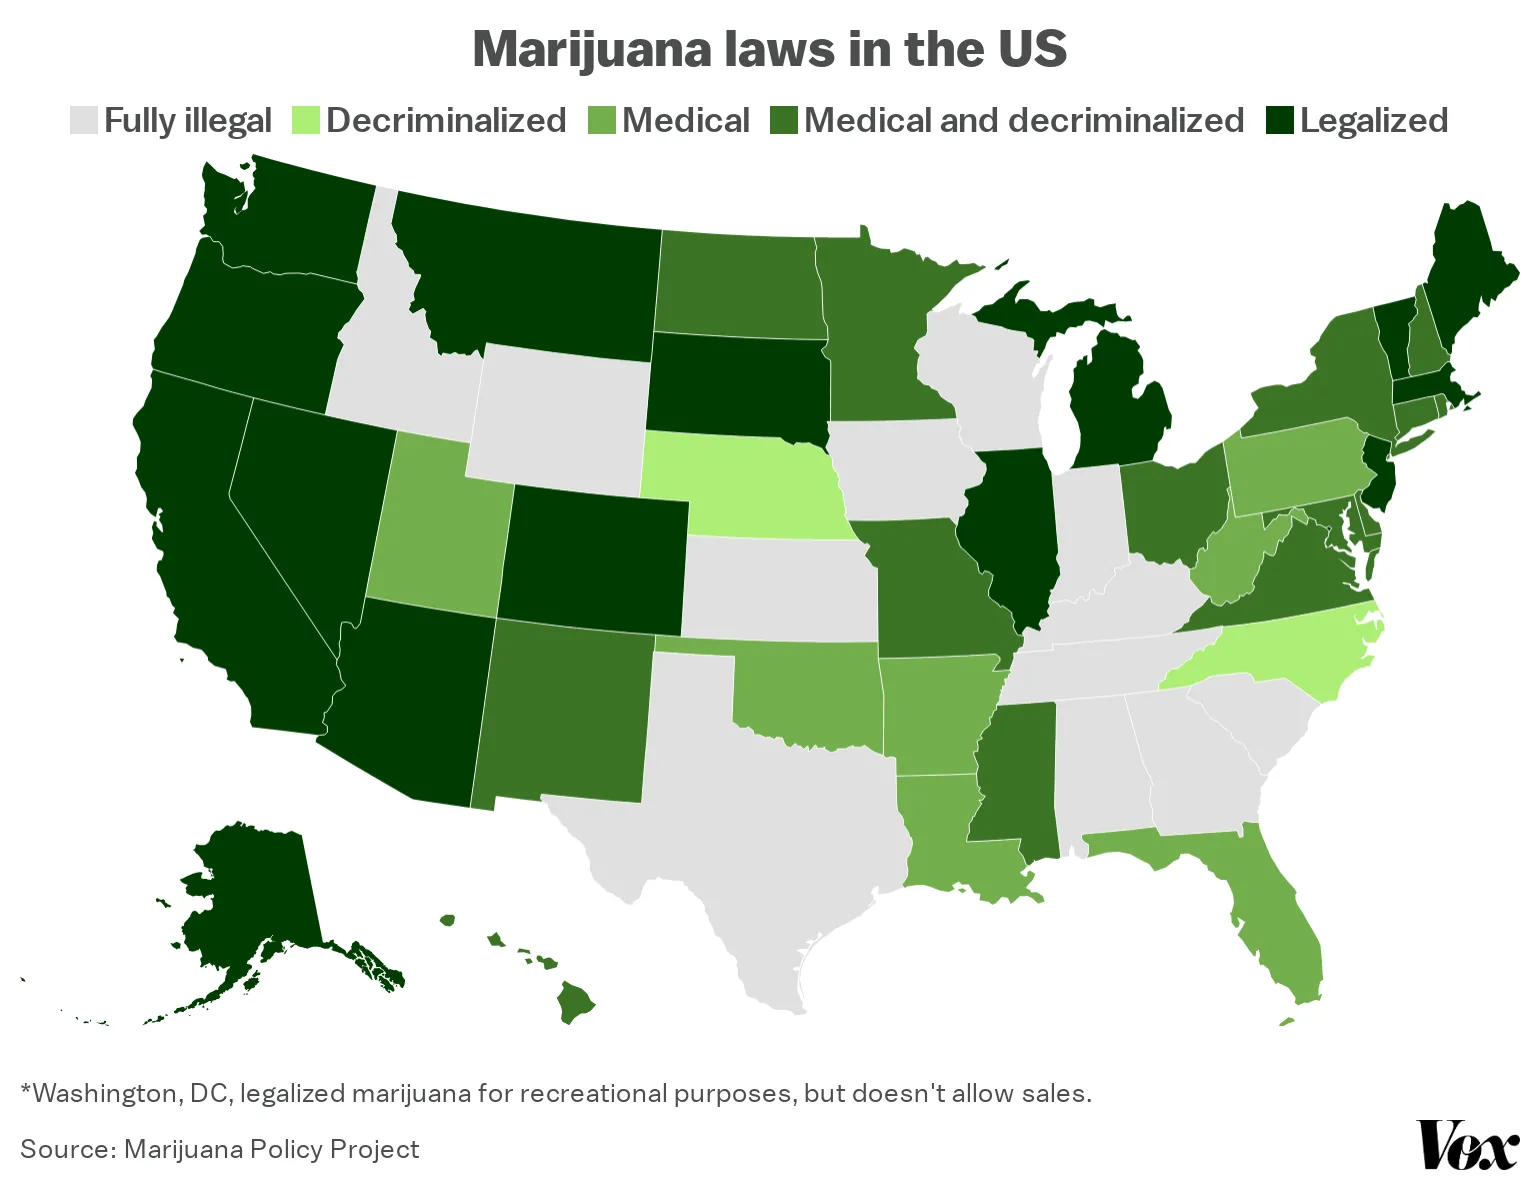 Map of US states showing status of marijuana legality either fully illegal, decriminalized, medical, medical and decriminalized, or legalized